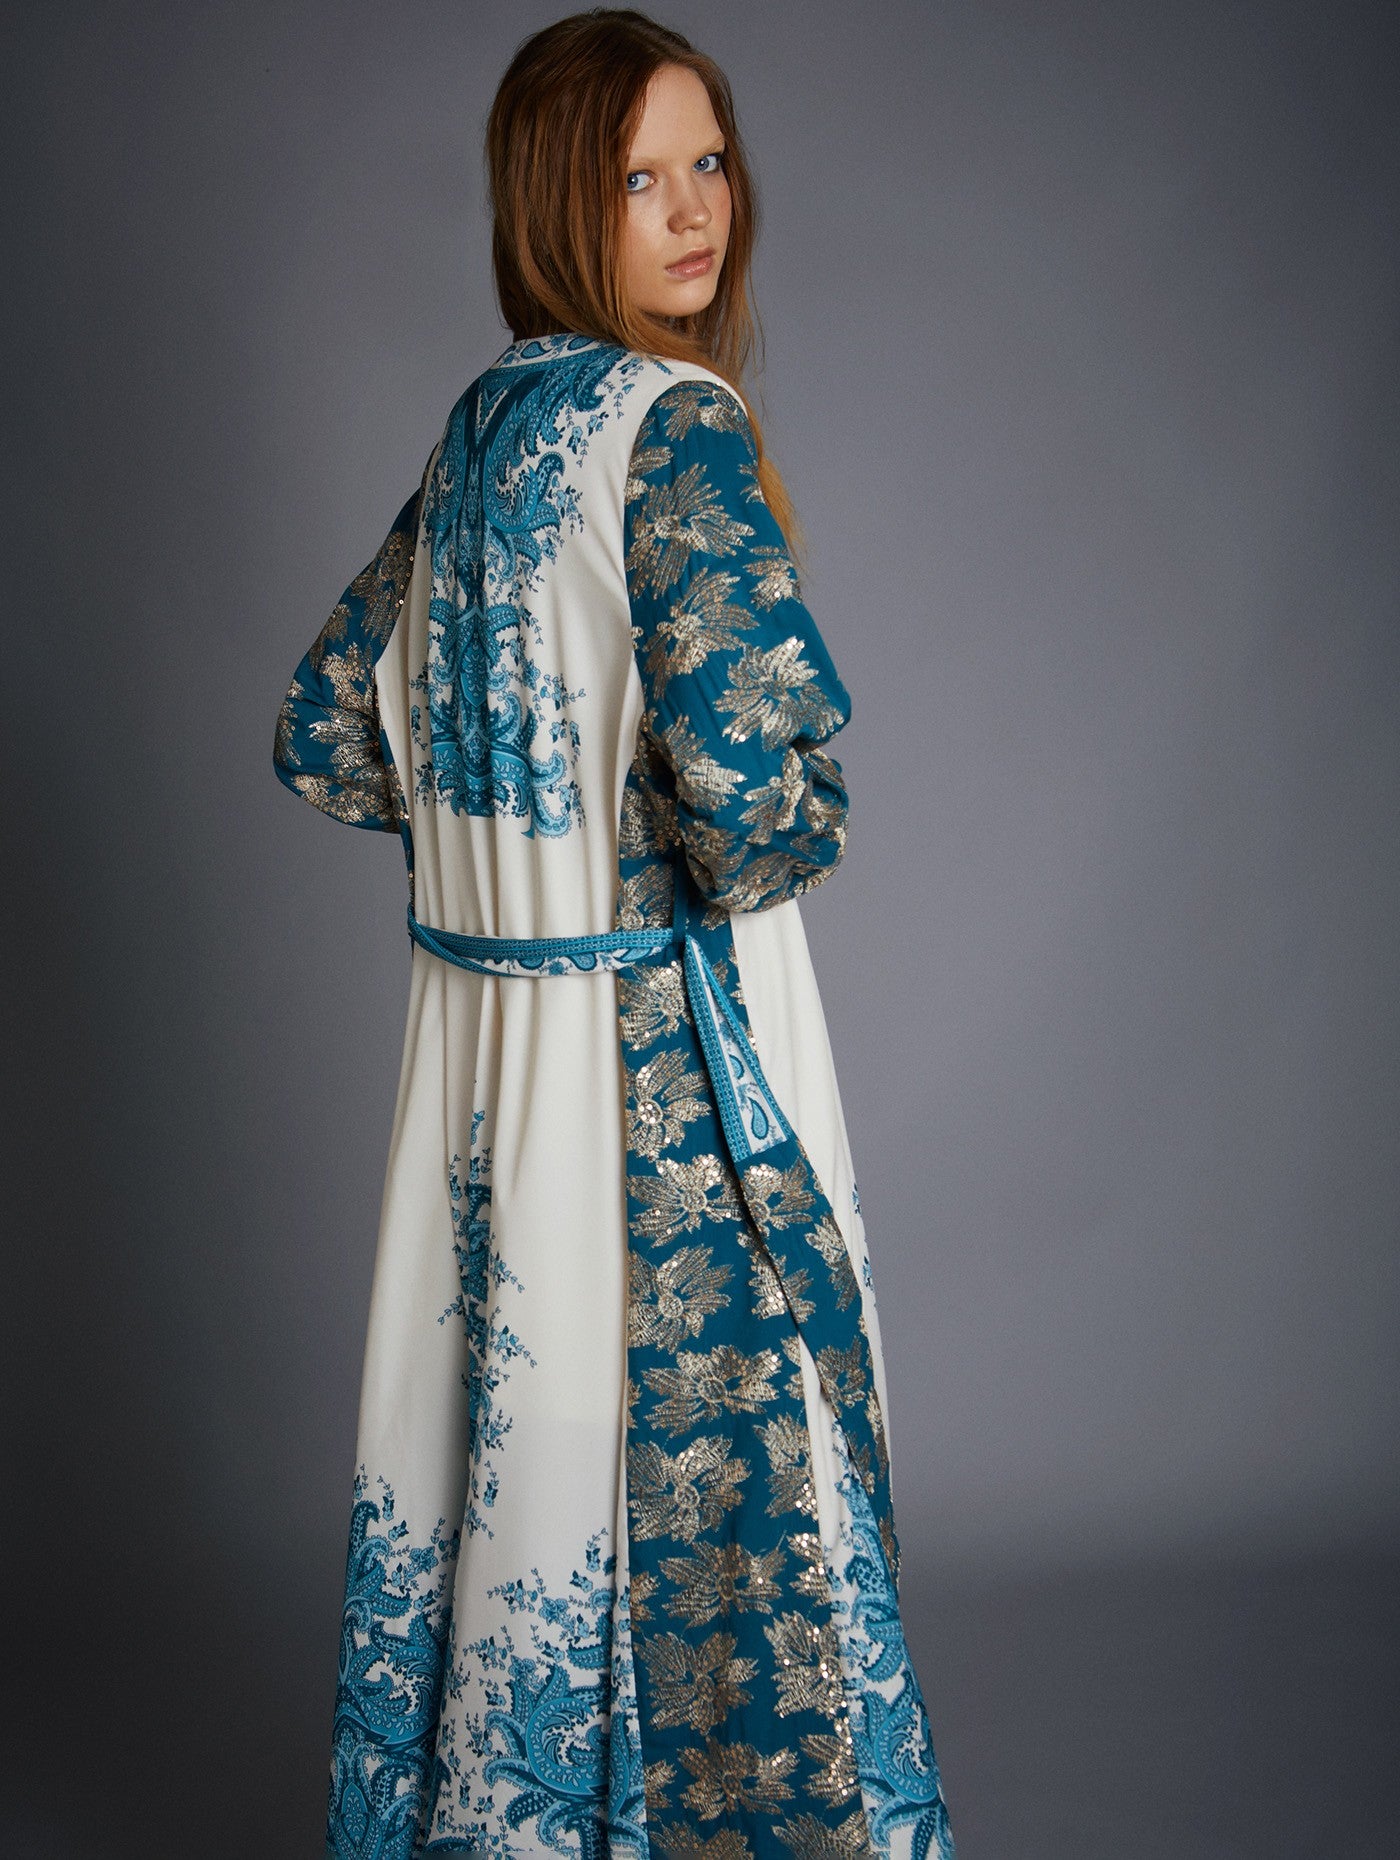 Kimono Azul by Meisie atrás